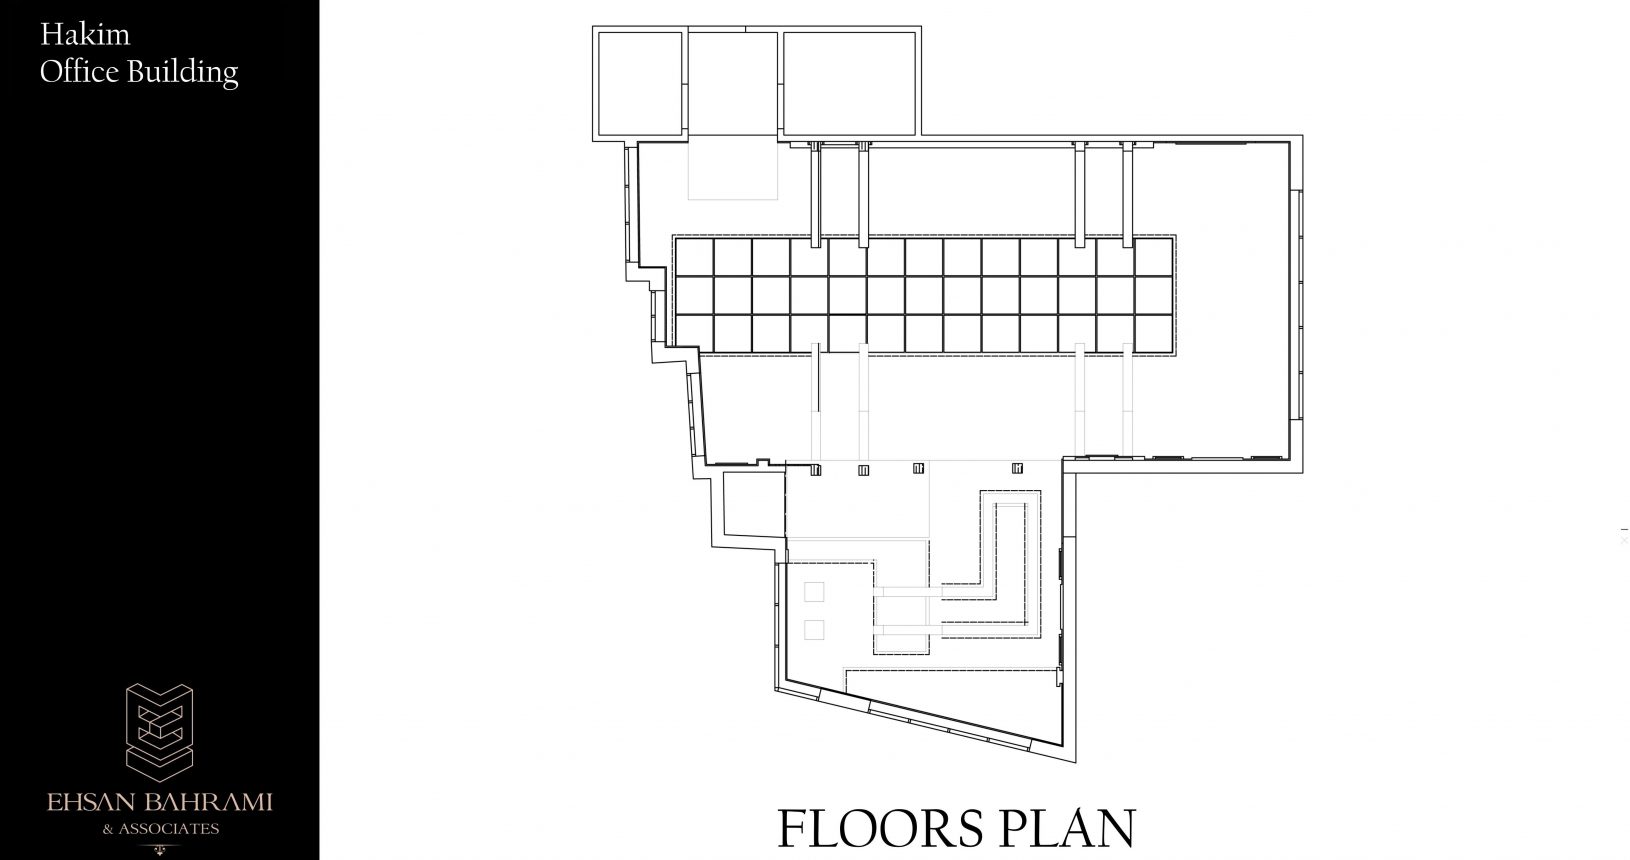 Hakim Office Building Floors Plan